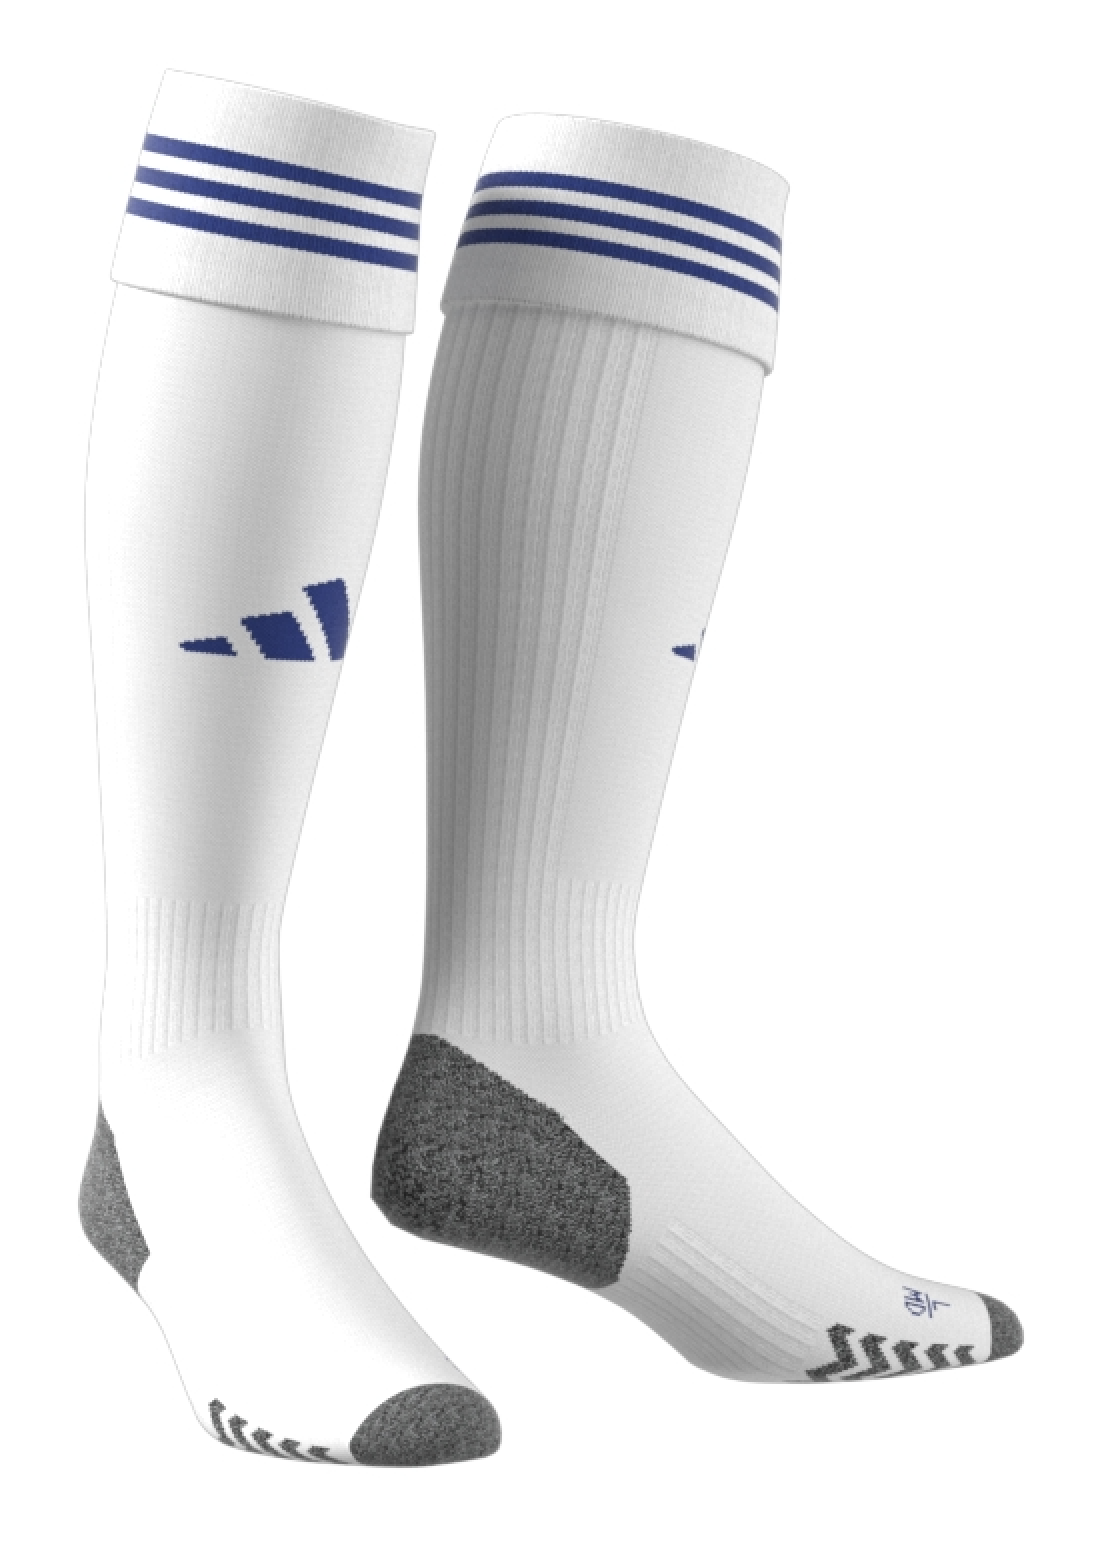 Adidas Adisock 23 - White / Team Royal Blue - Total Football Direct